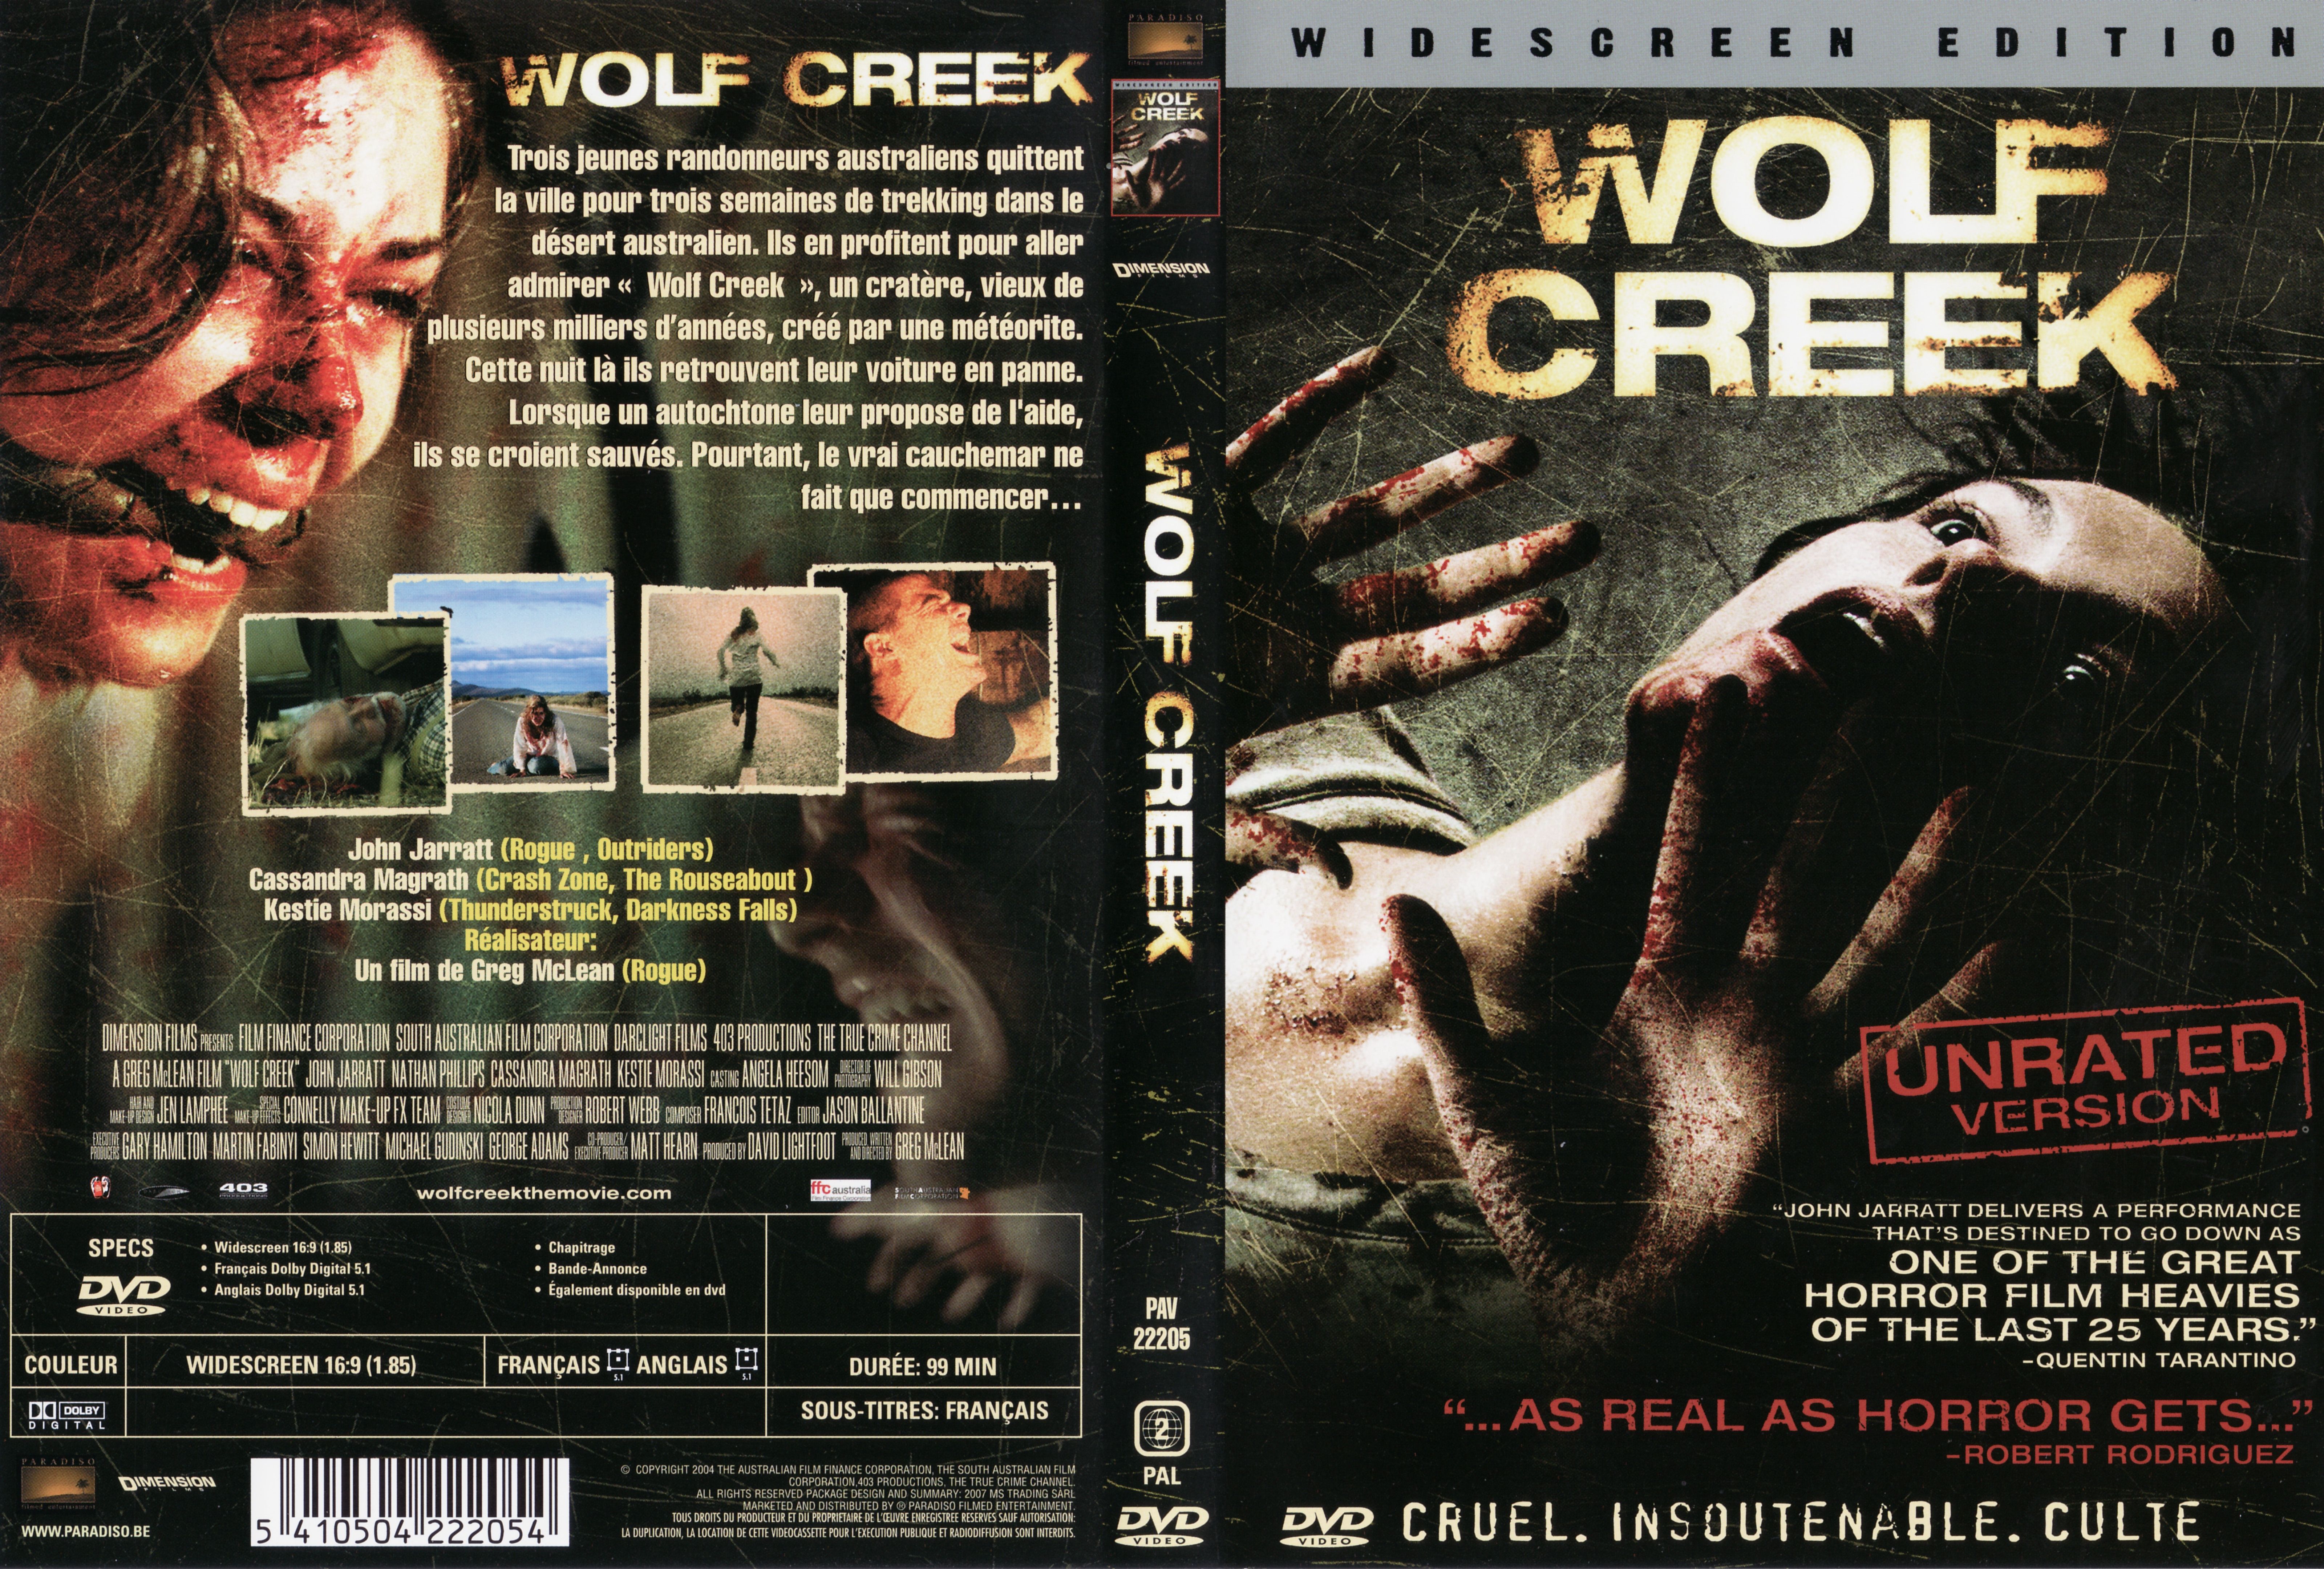 Jaquette DVD Wolf creek v3